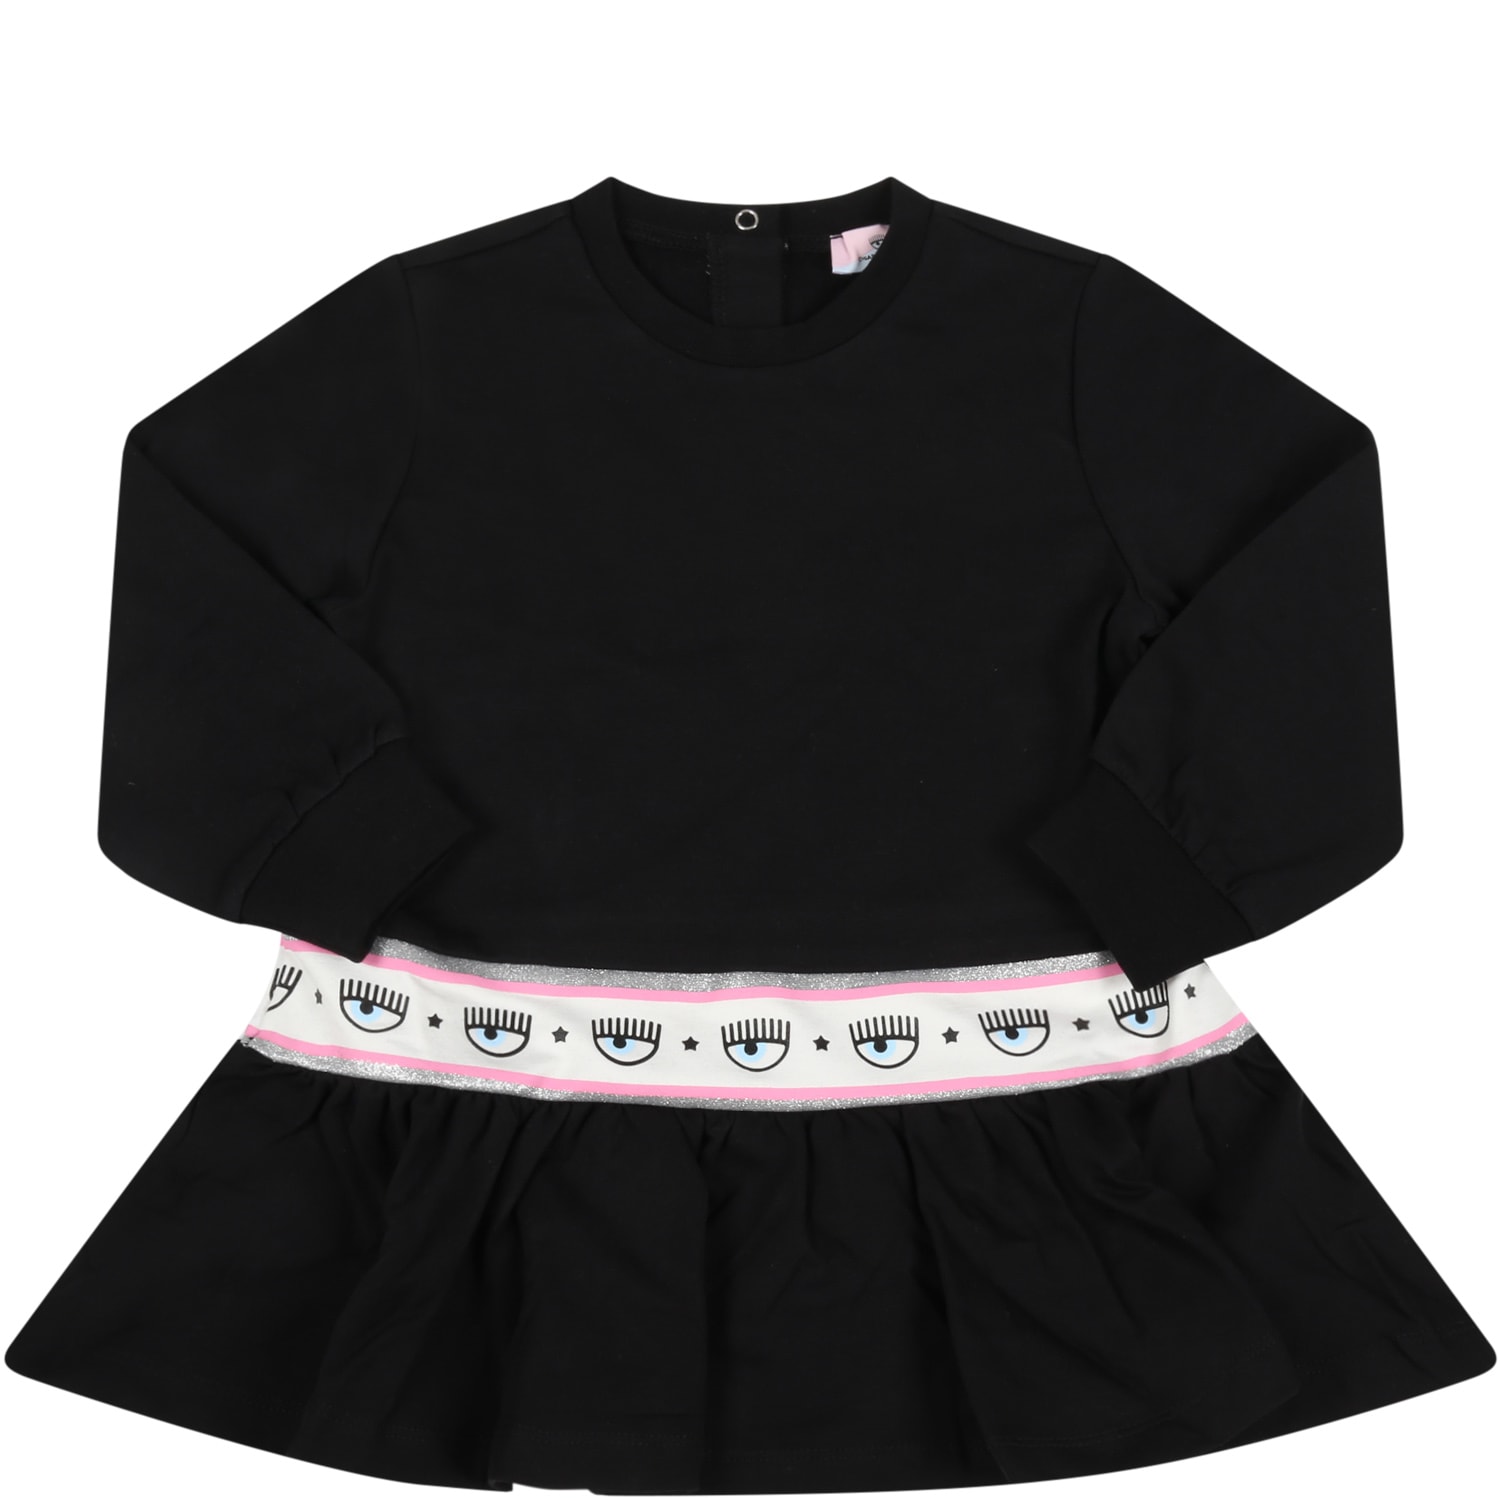 Chiara Ferragni Black Dress For Baby Girl With Iconic Eyes